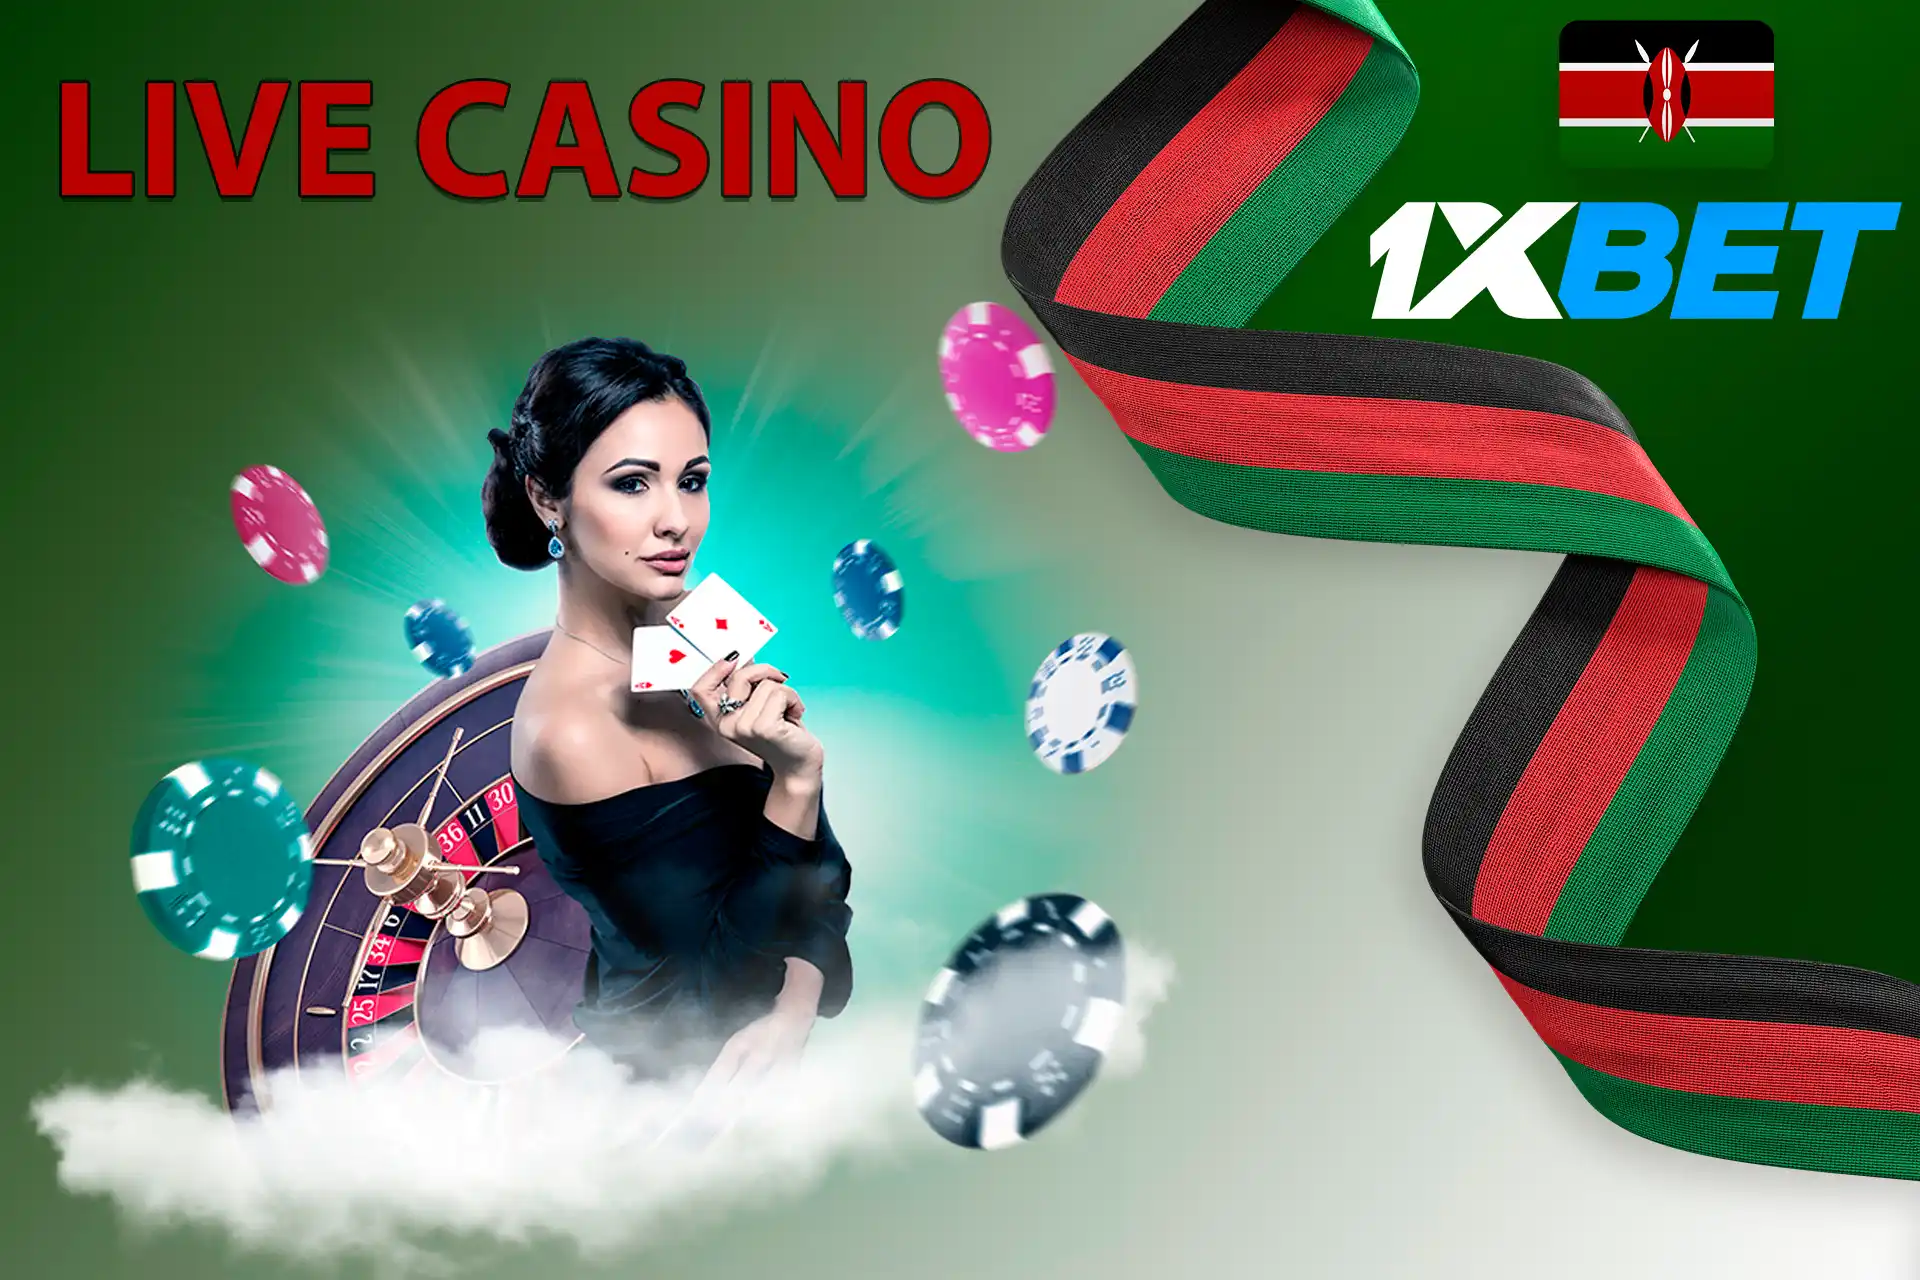 Live casino gambling at 1xBet